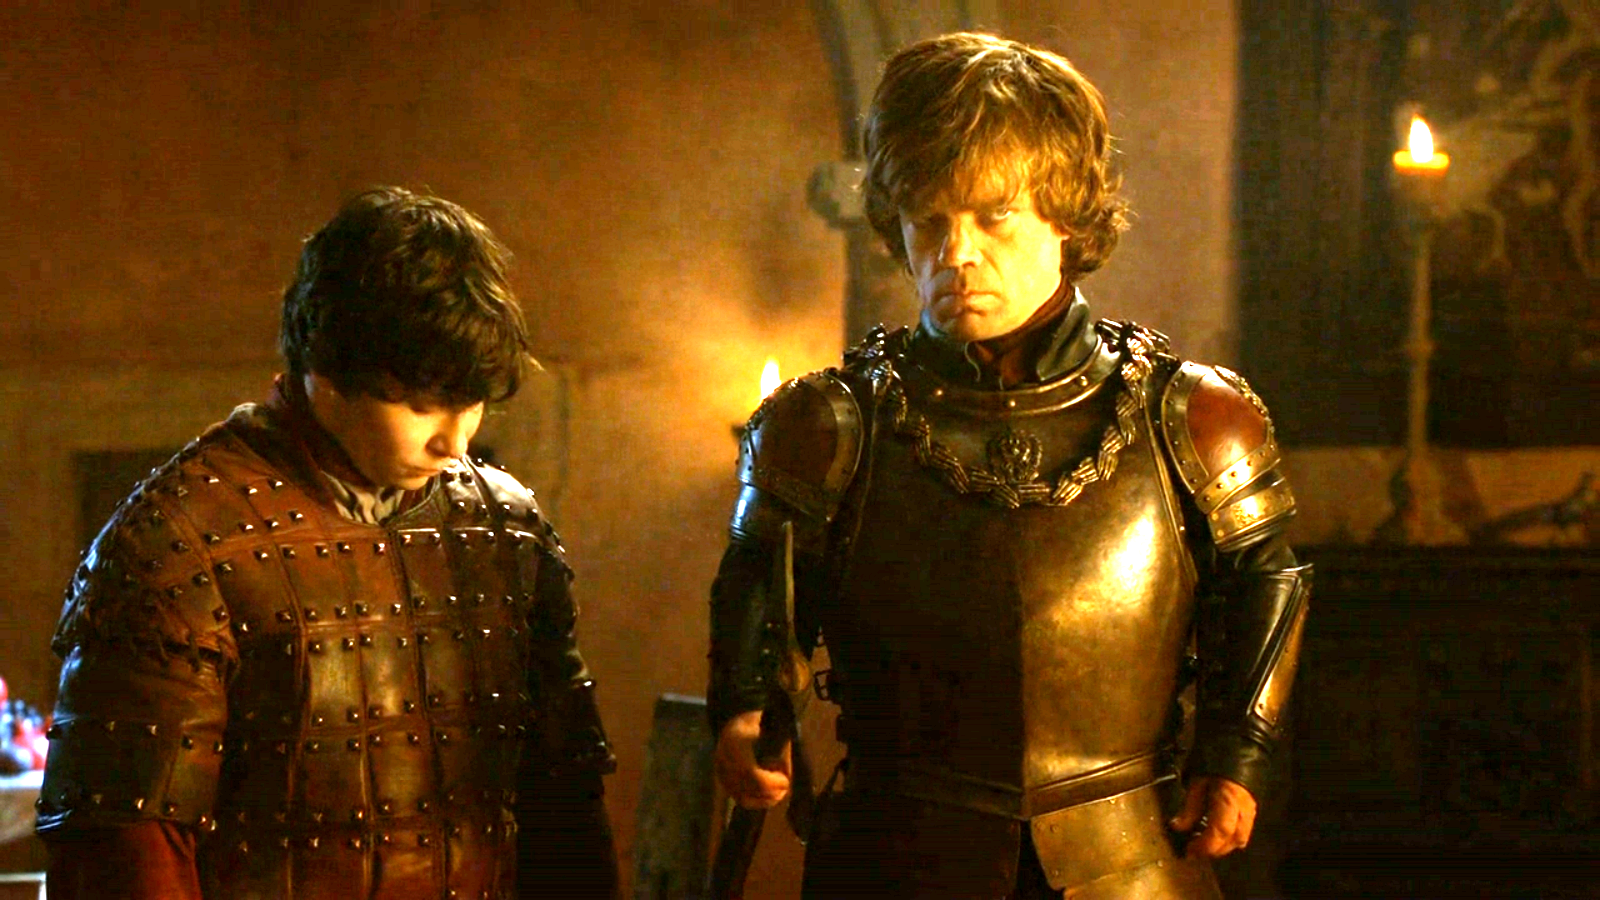 Tyrion and Podric